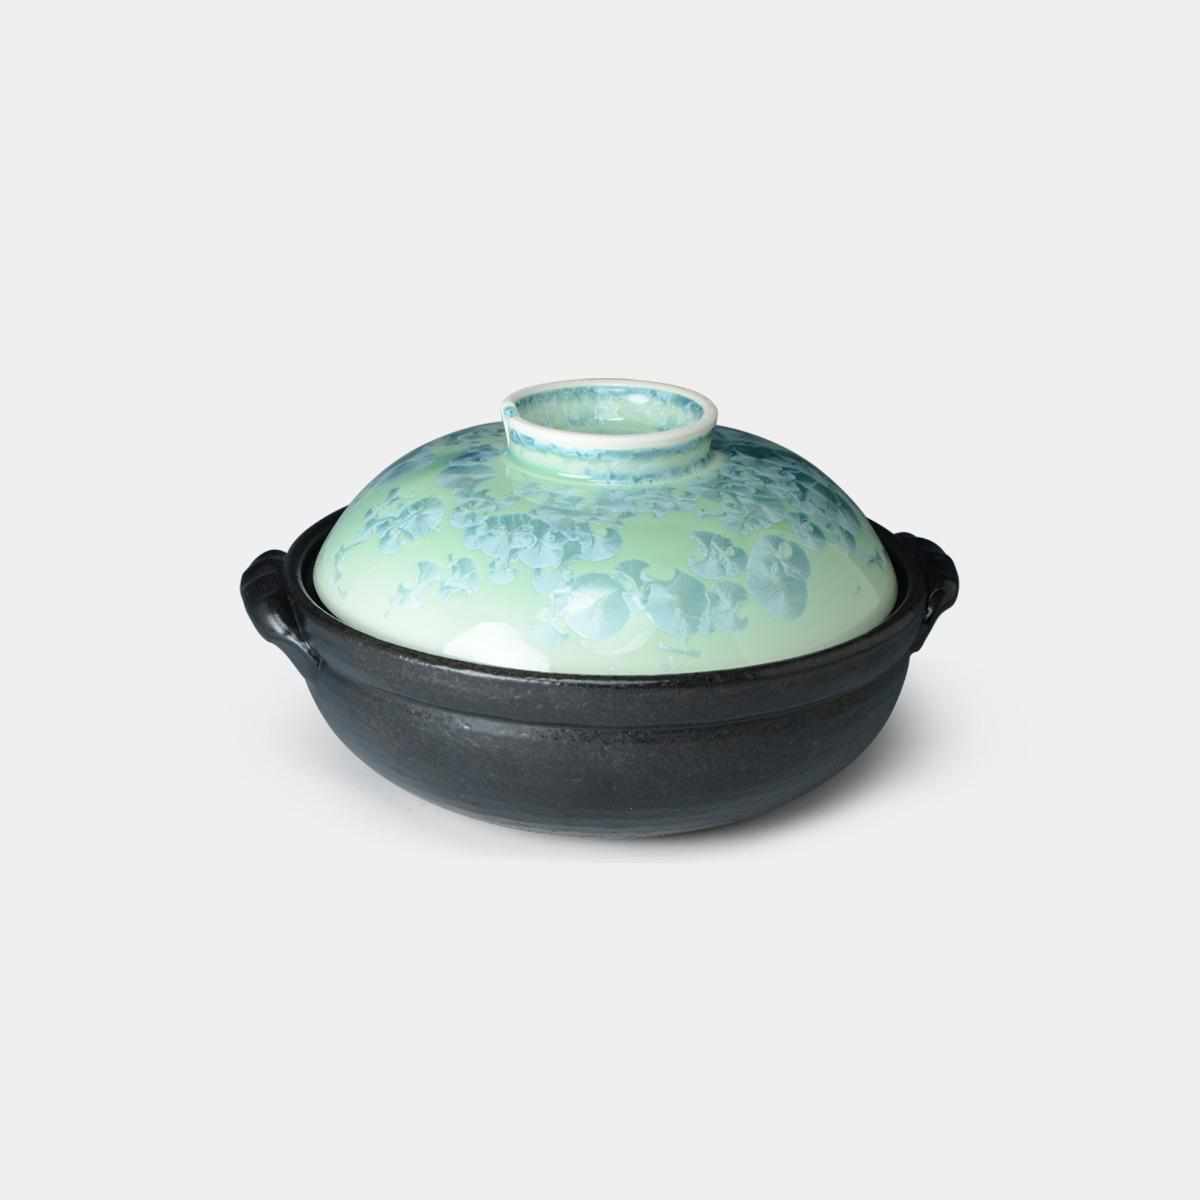 【土鍋】花結晶 (緑) ガス,IH用 | 京焼-清水焼 | 陶葊